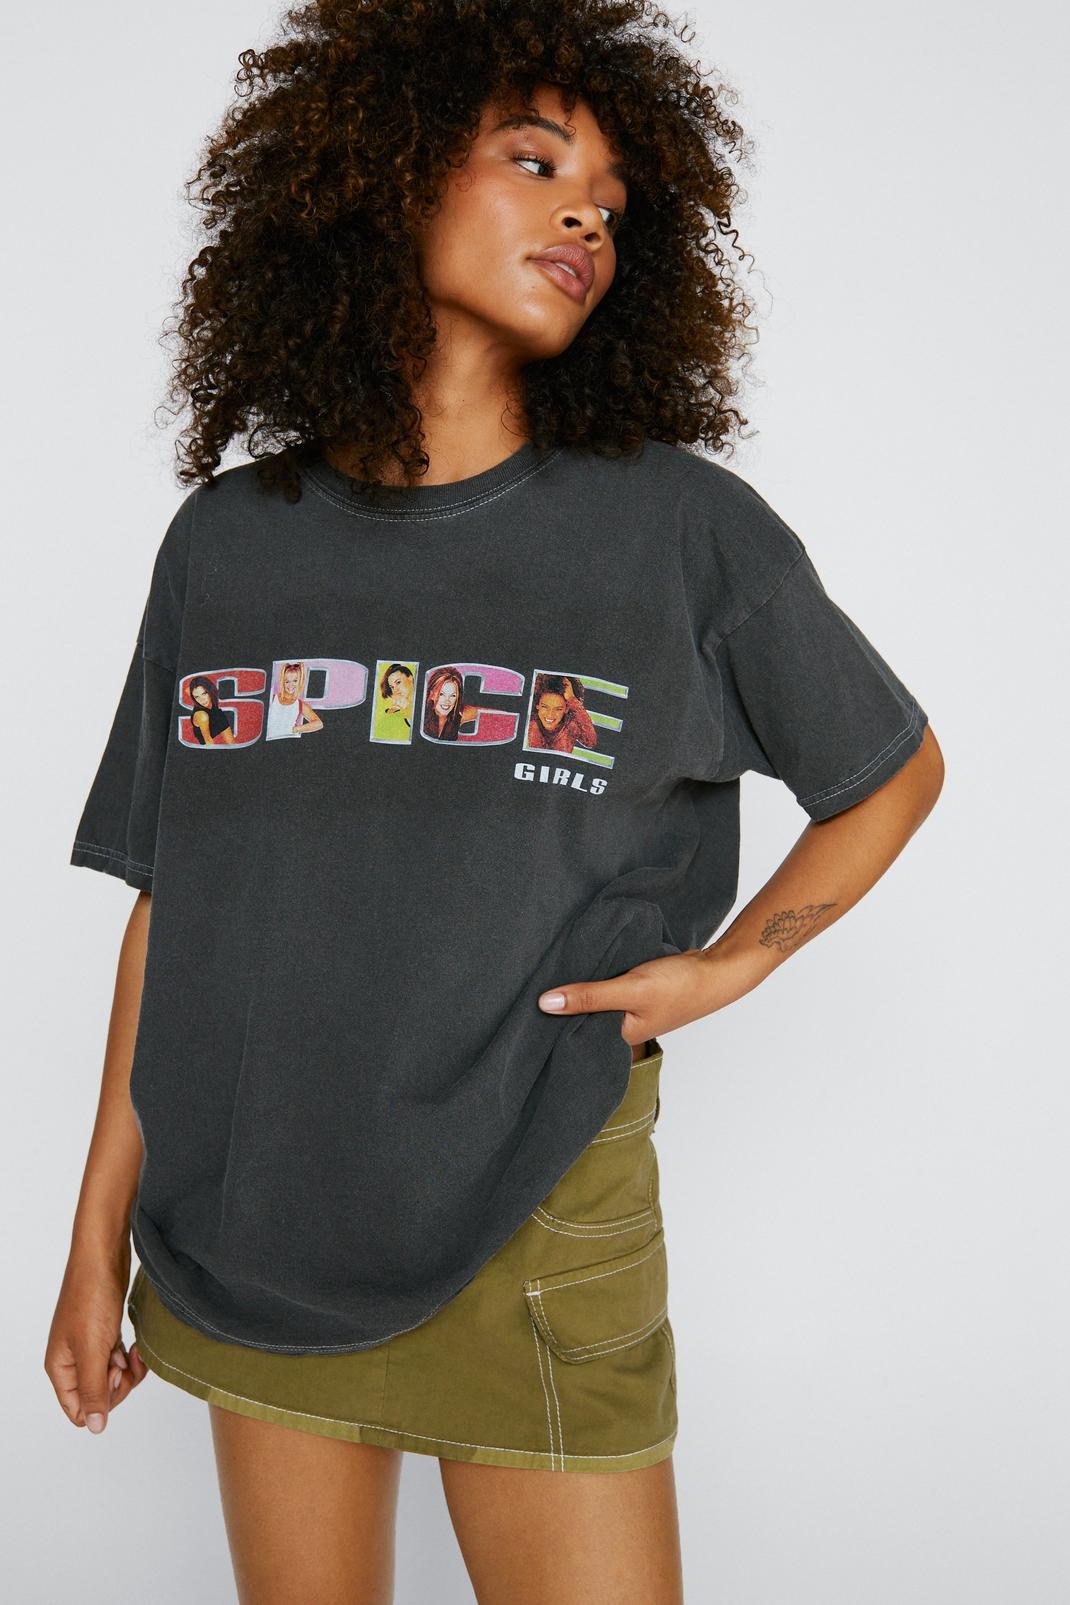 Women's Music City Short Sleeve Graphic T-Shirt - Beige XS